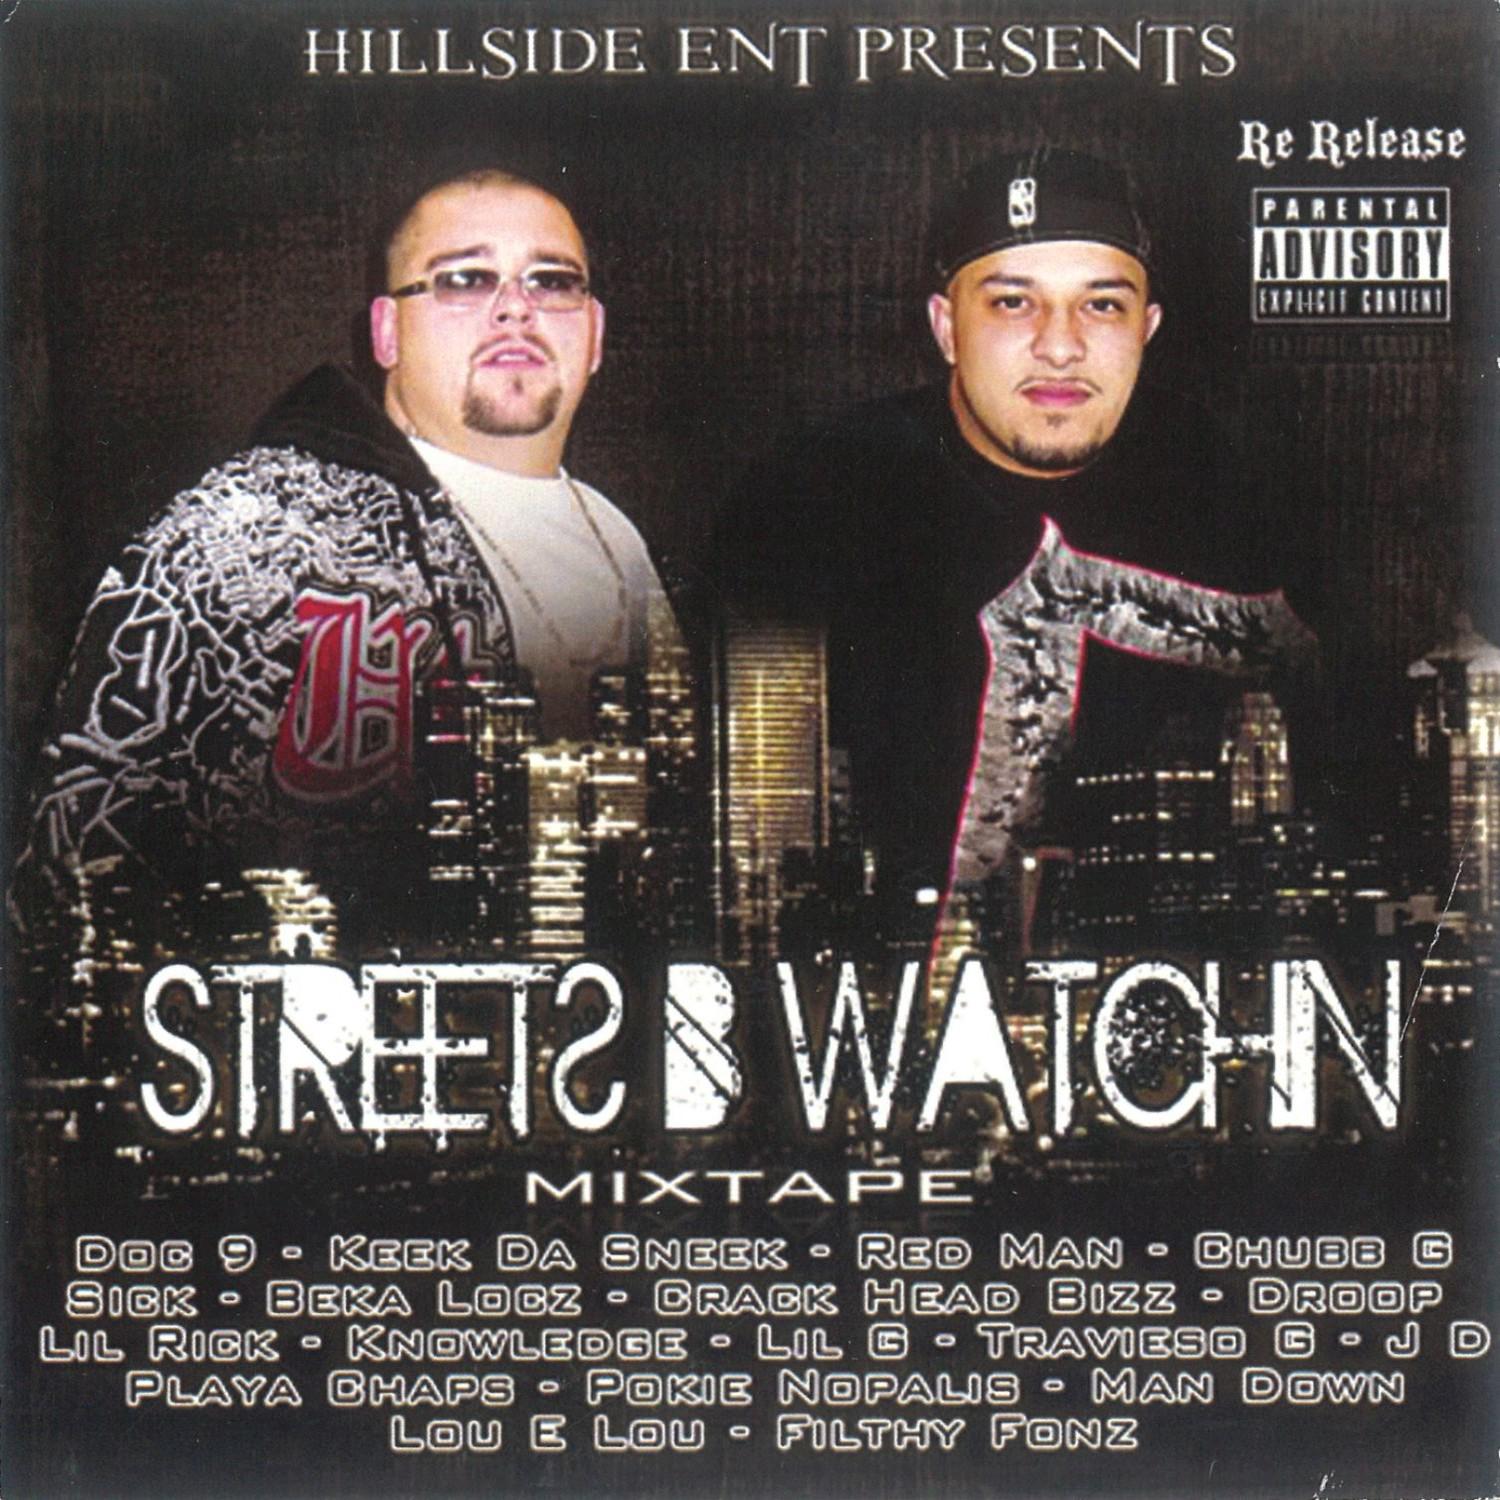 Streets -B- Watchin Mixtape